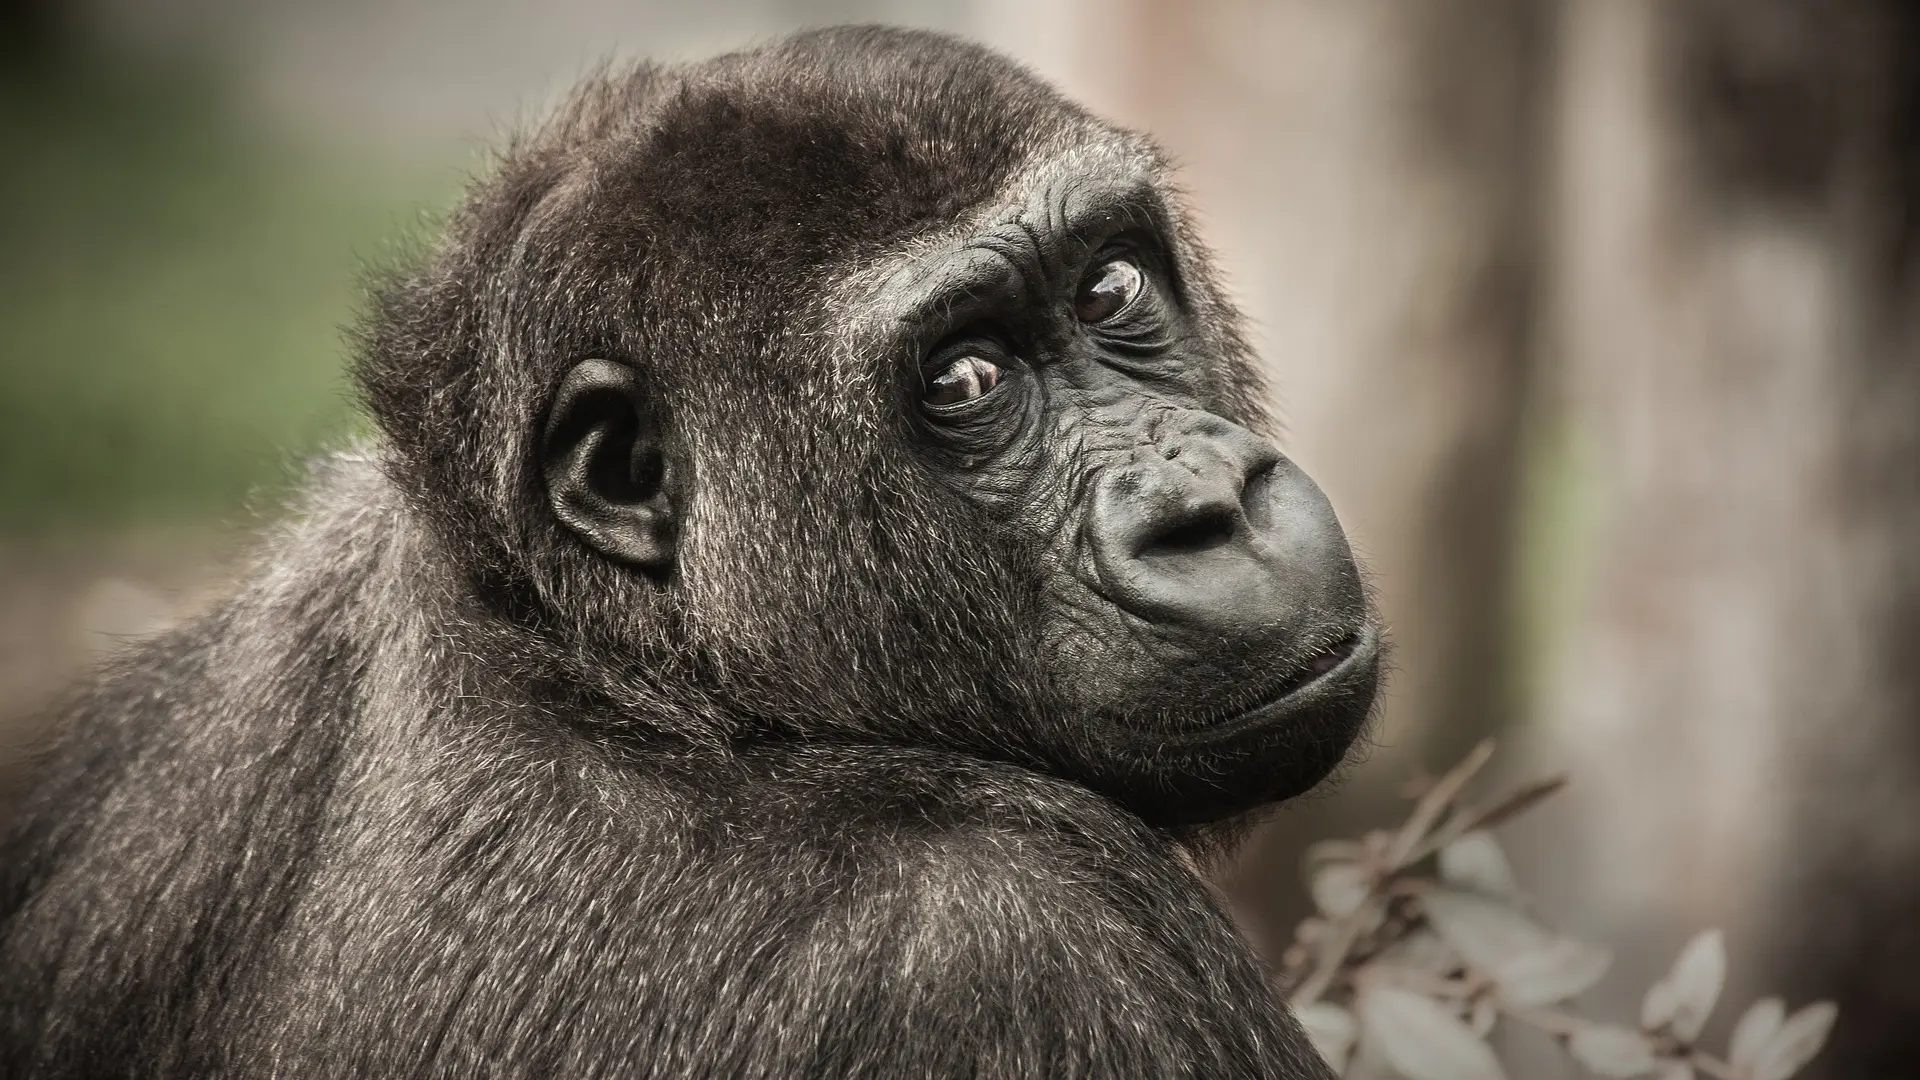 gorilla-gorila majmun pixabay-6511a89a51cb2.webp